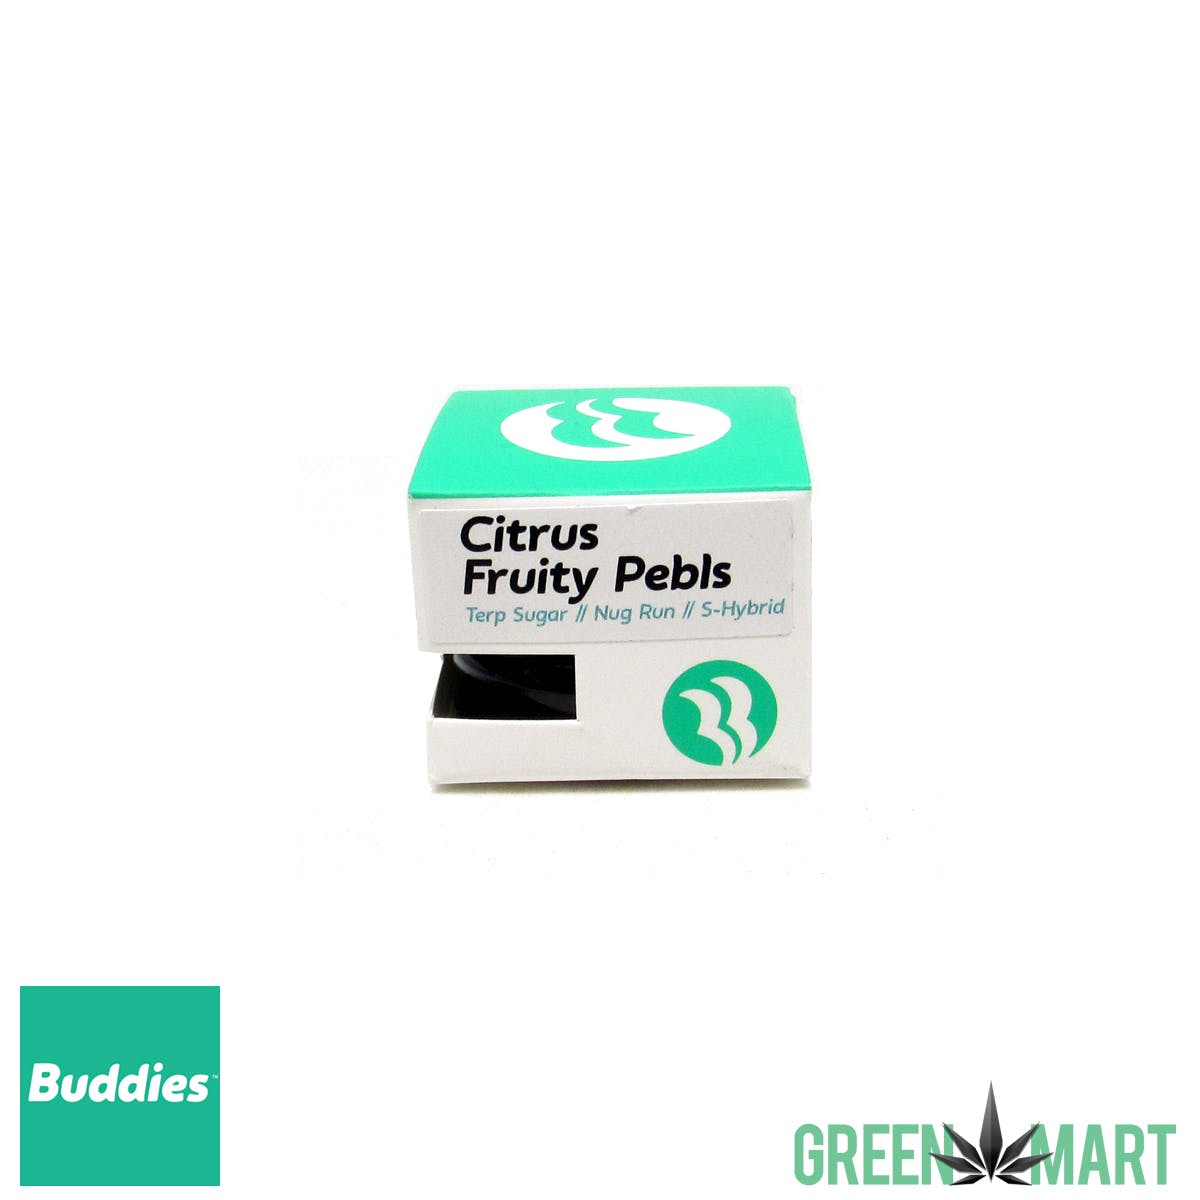 Buddies 1g Terp Sugar Dab - Citrus Fruity Pebbles